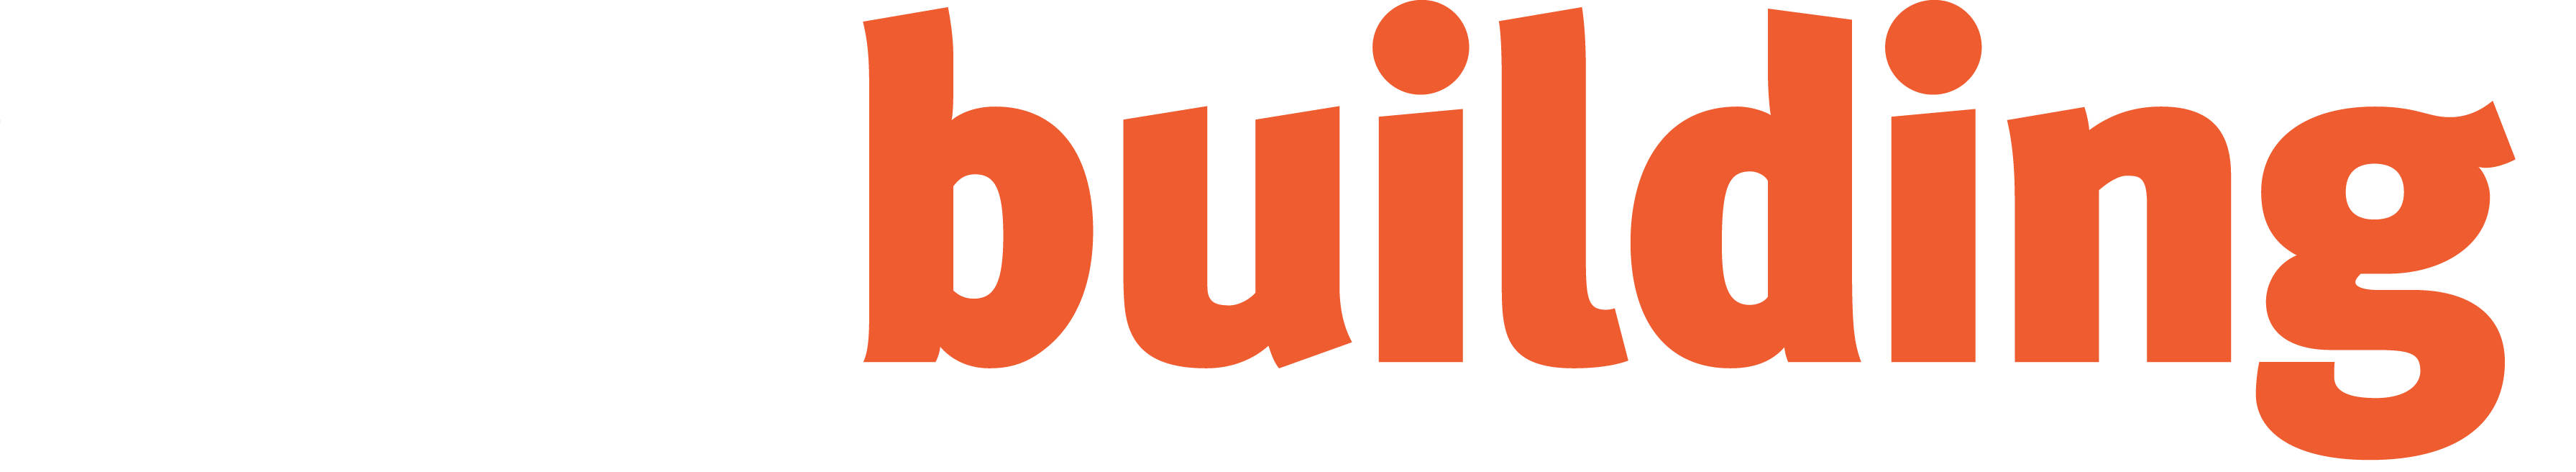 planbuilding-logo-white-orange